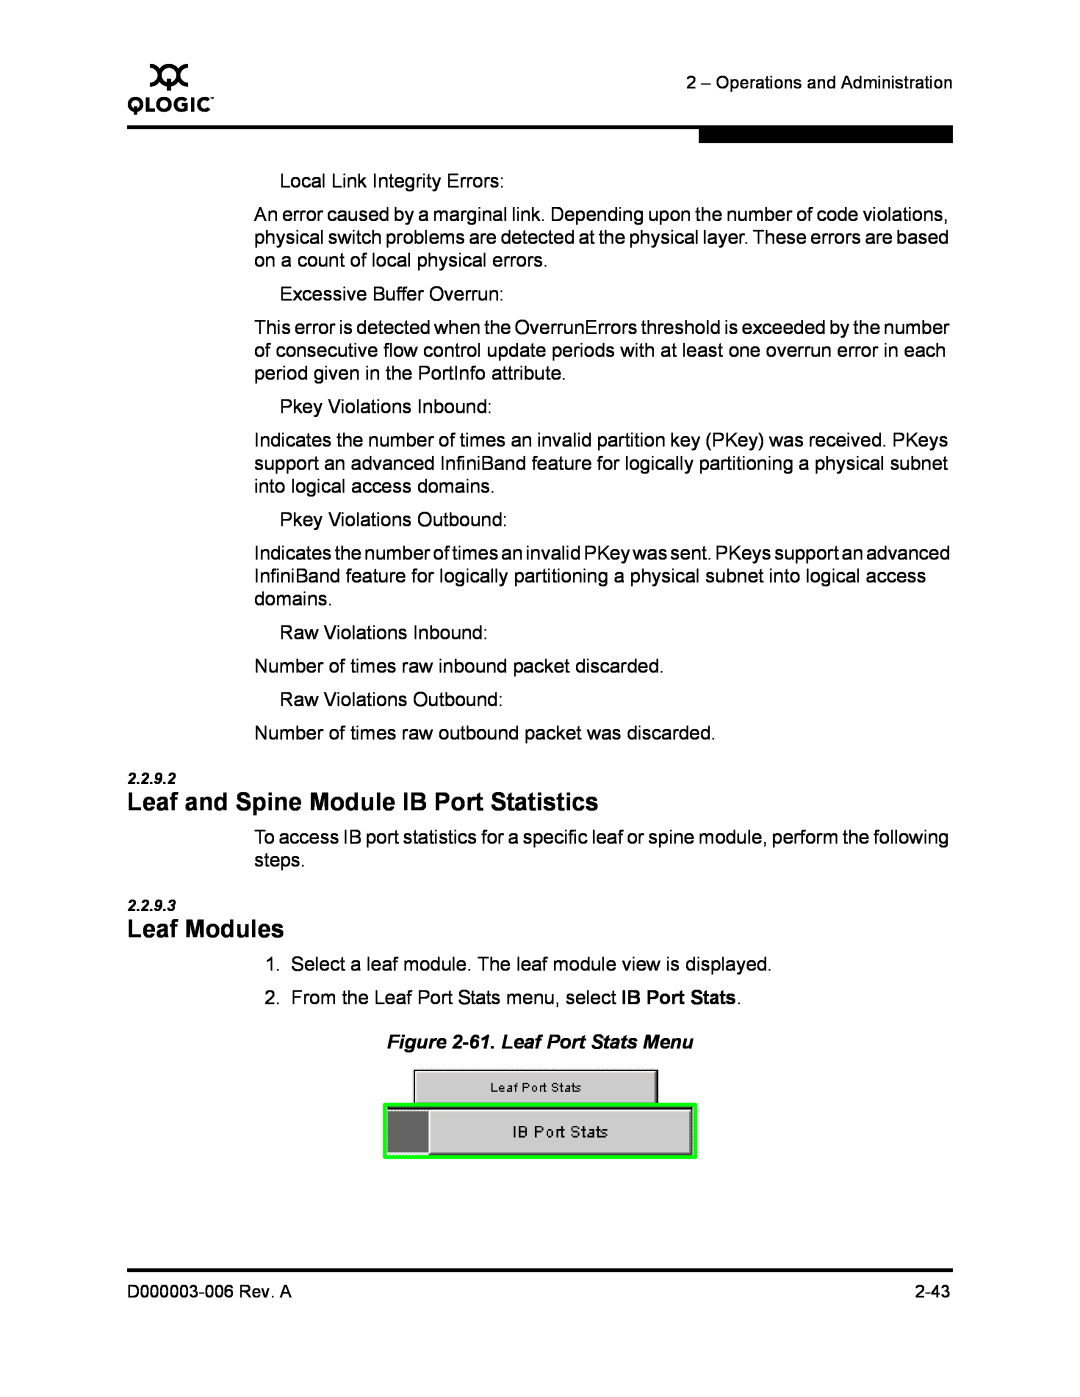 Q-Logic 9000 manual Leaf and Spine Module IB Port Statistics, Leaf Modules, 61. Leaf Port Stats Menu 